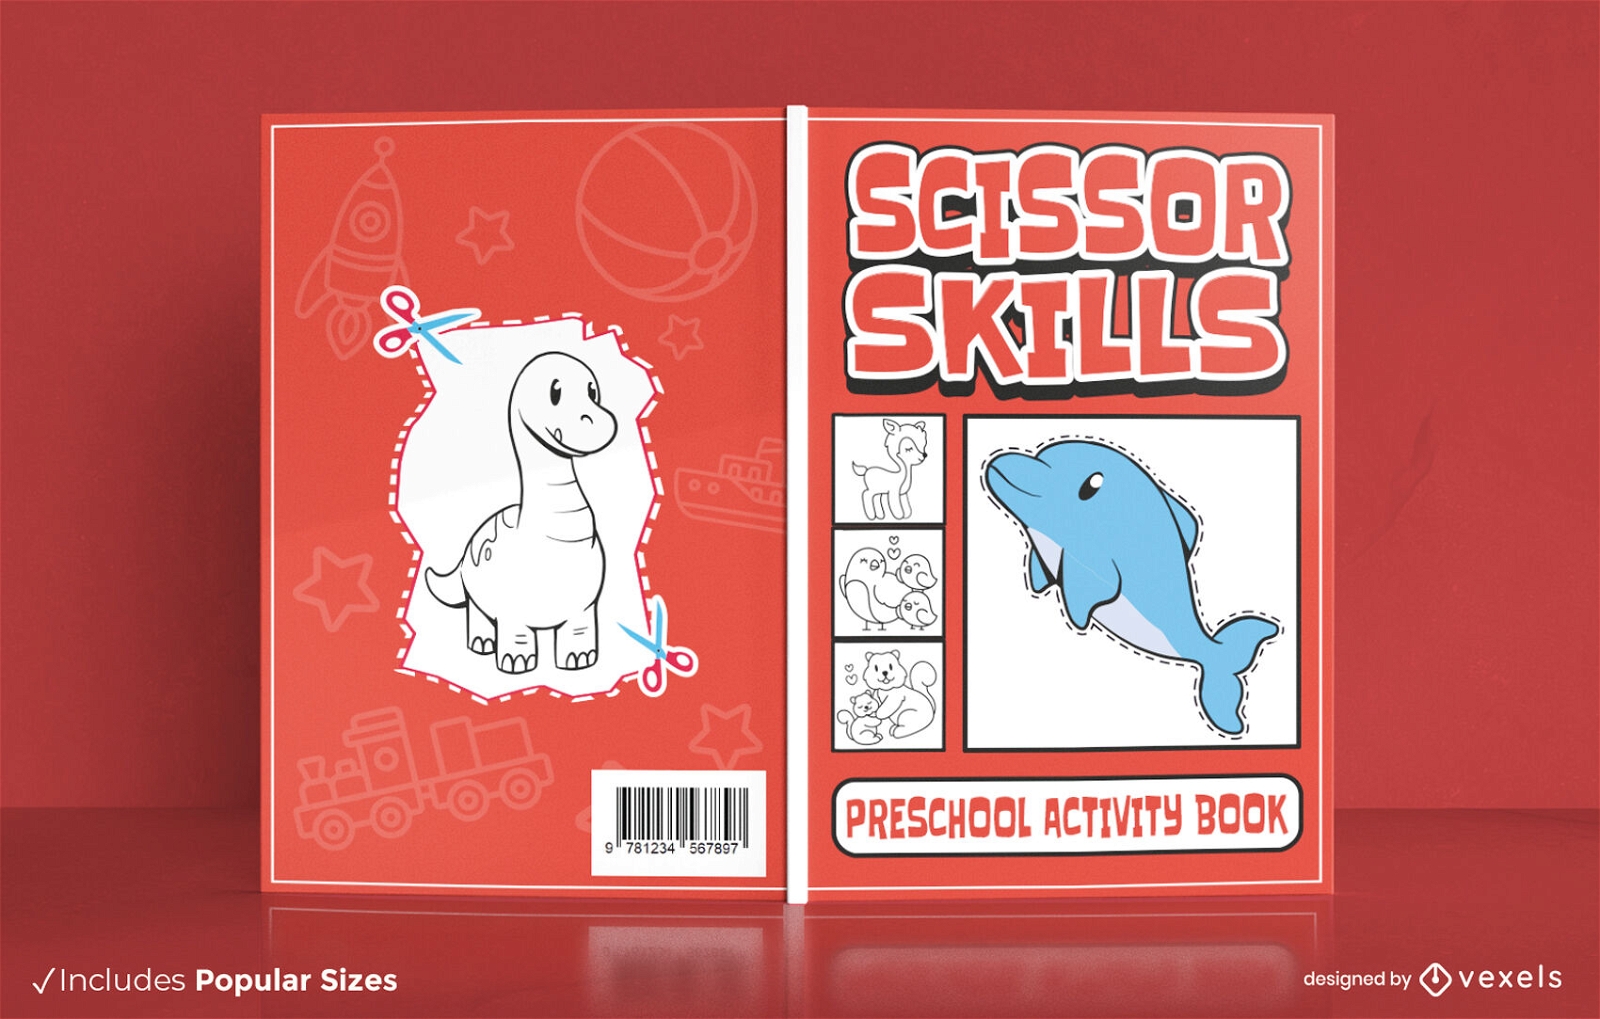 Preschool scissor skills activity book cover design